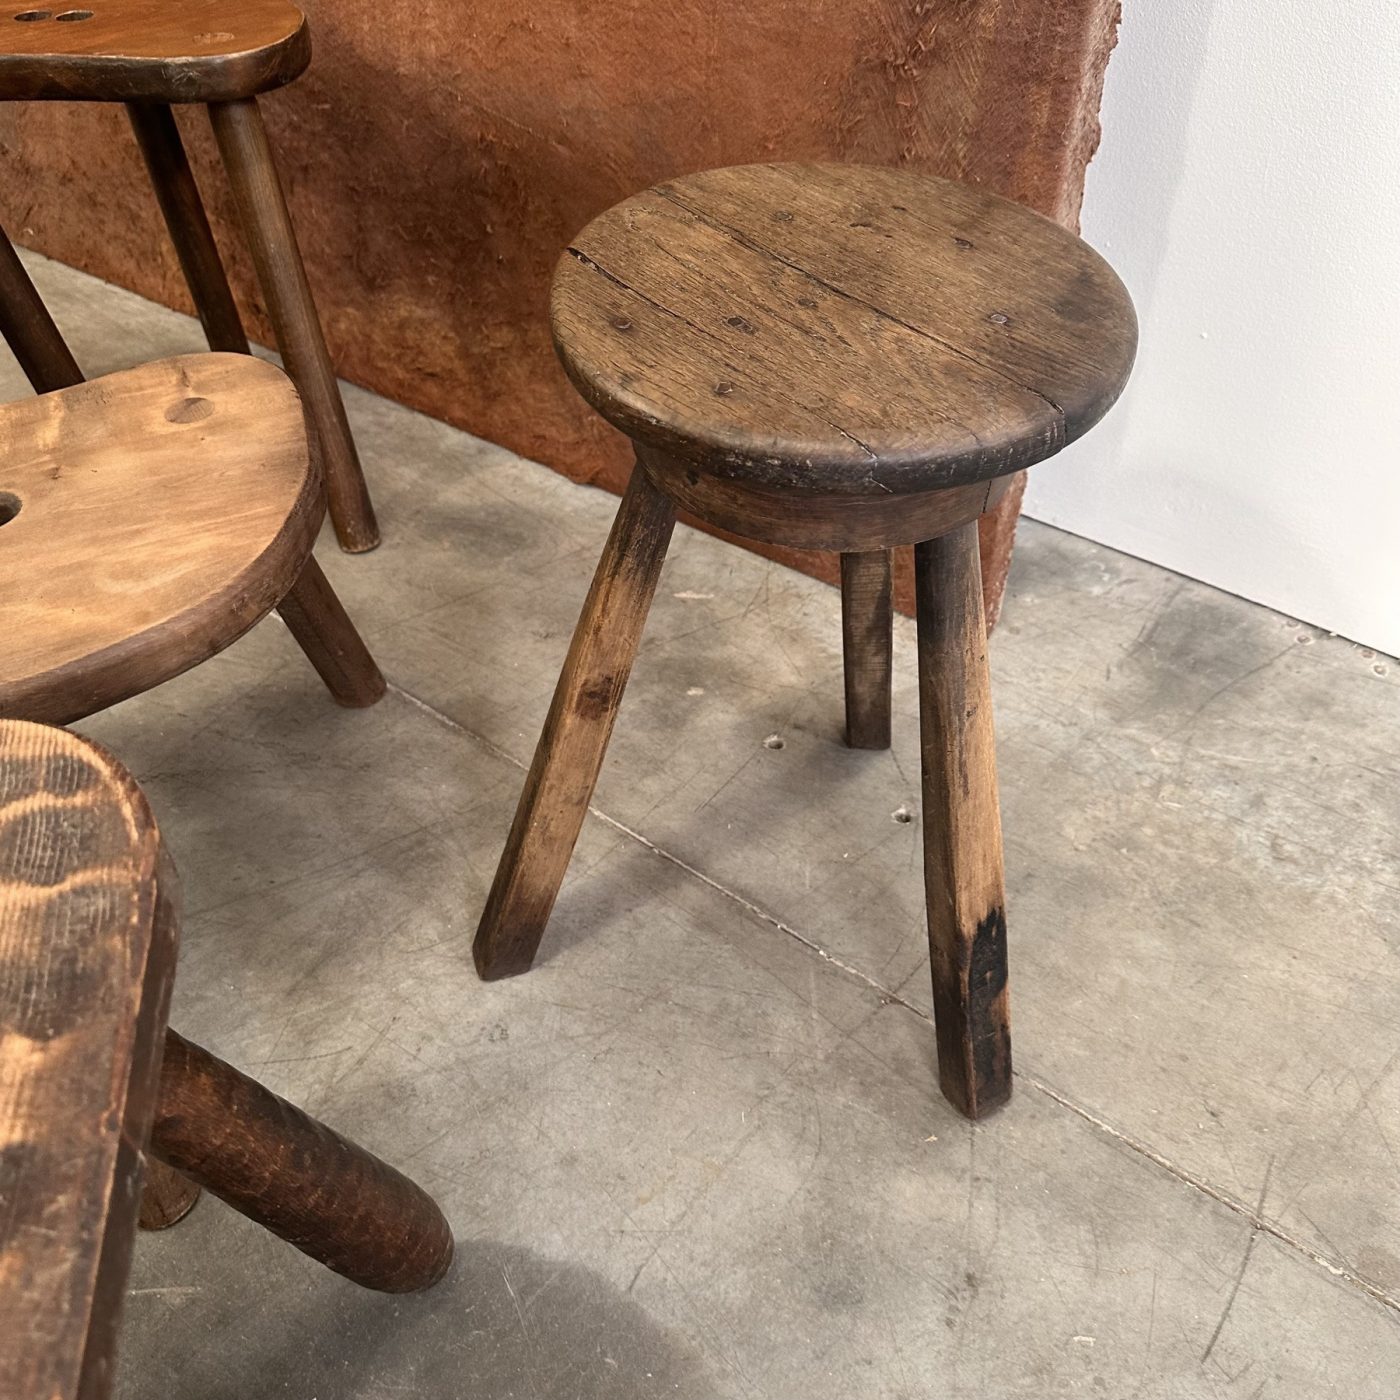 objet-vagabond-stool-collection0004